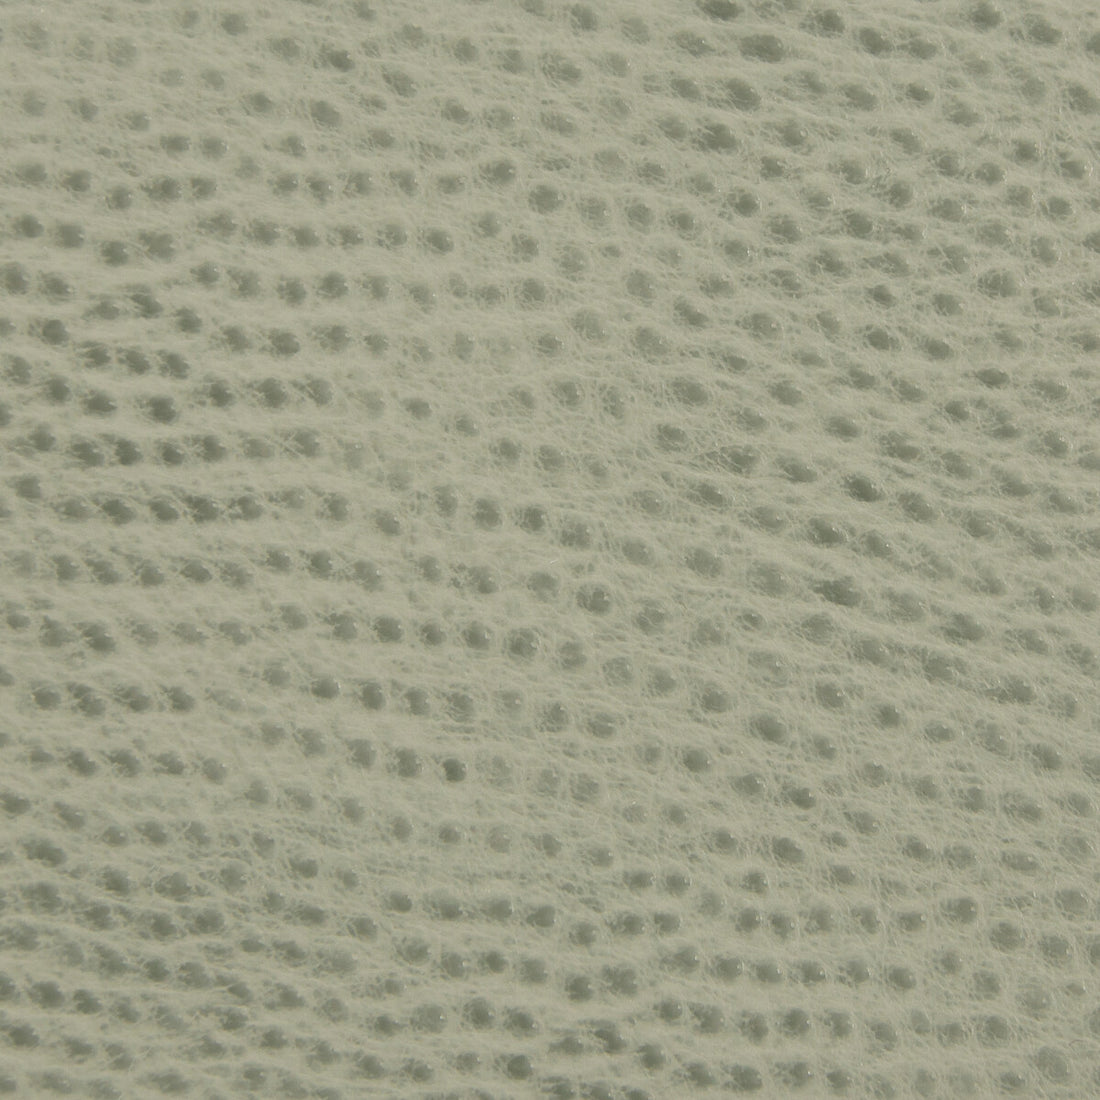 Kravet Contract fabric in belus-135 color - pattern BELUS.135.0 - by Kravet Contract